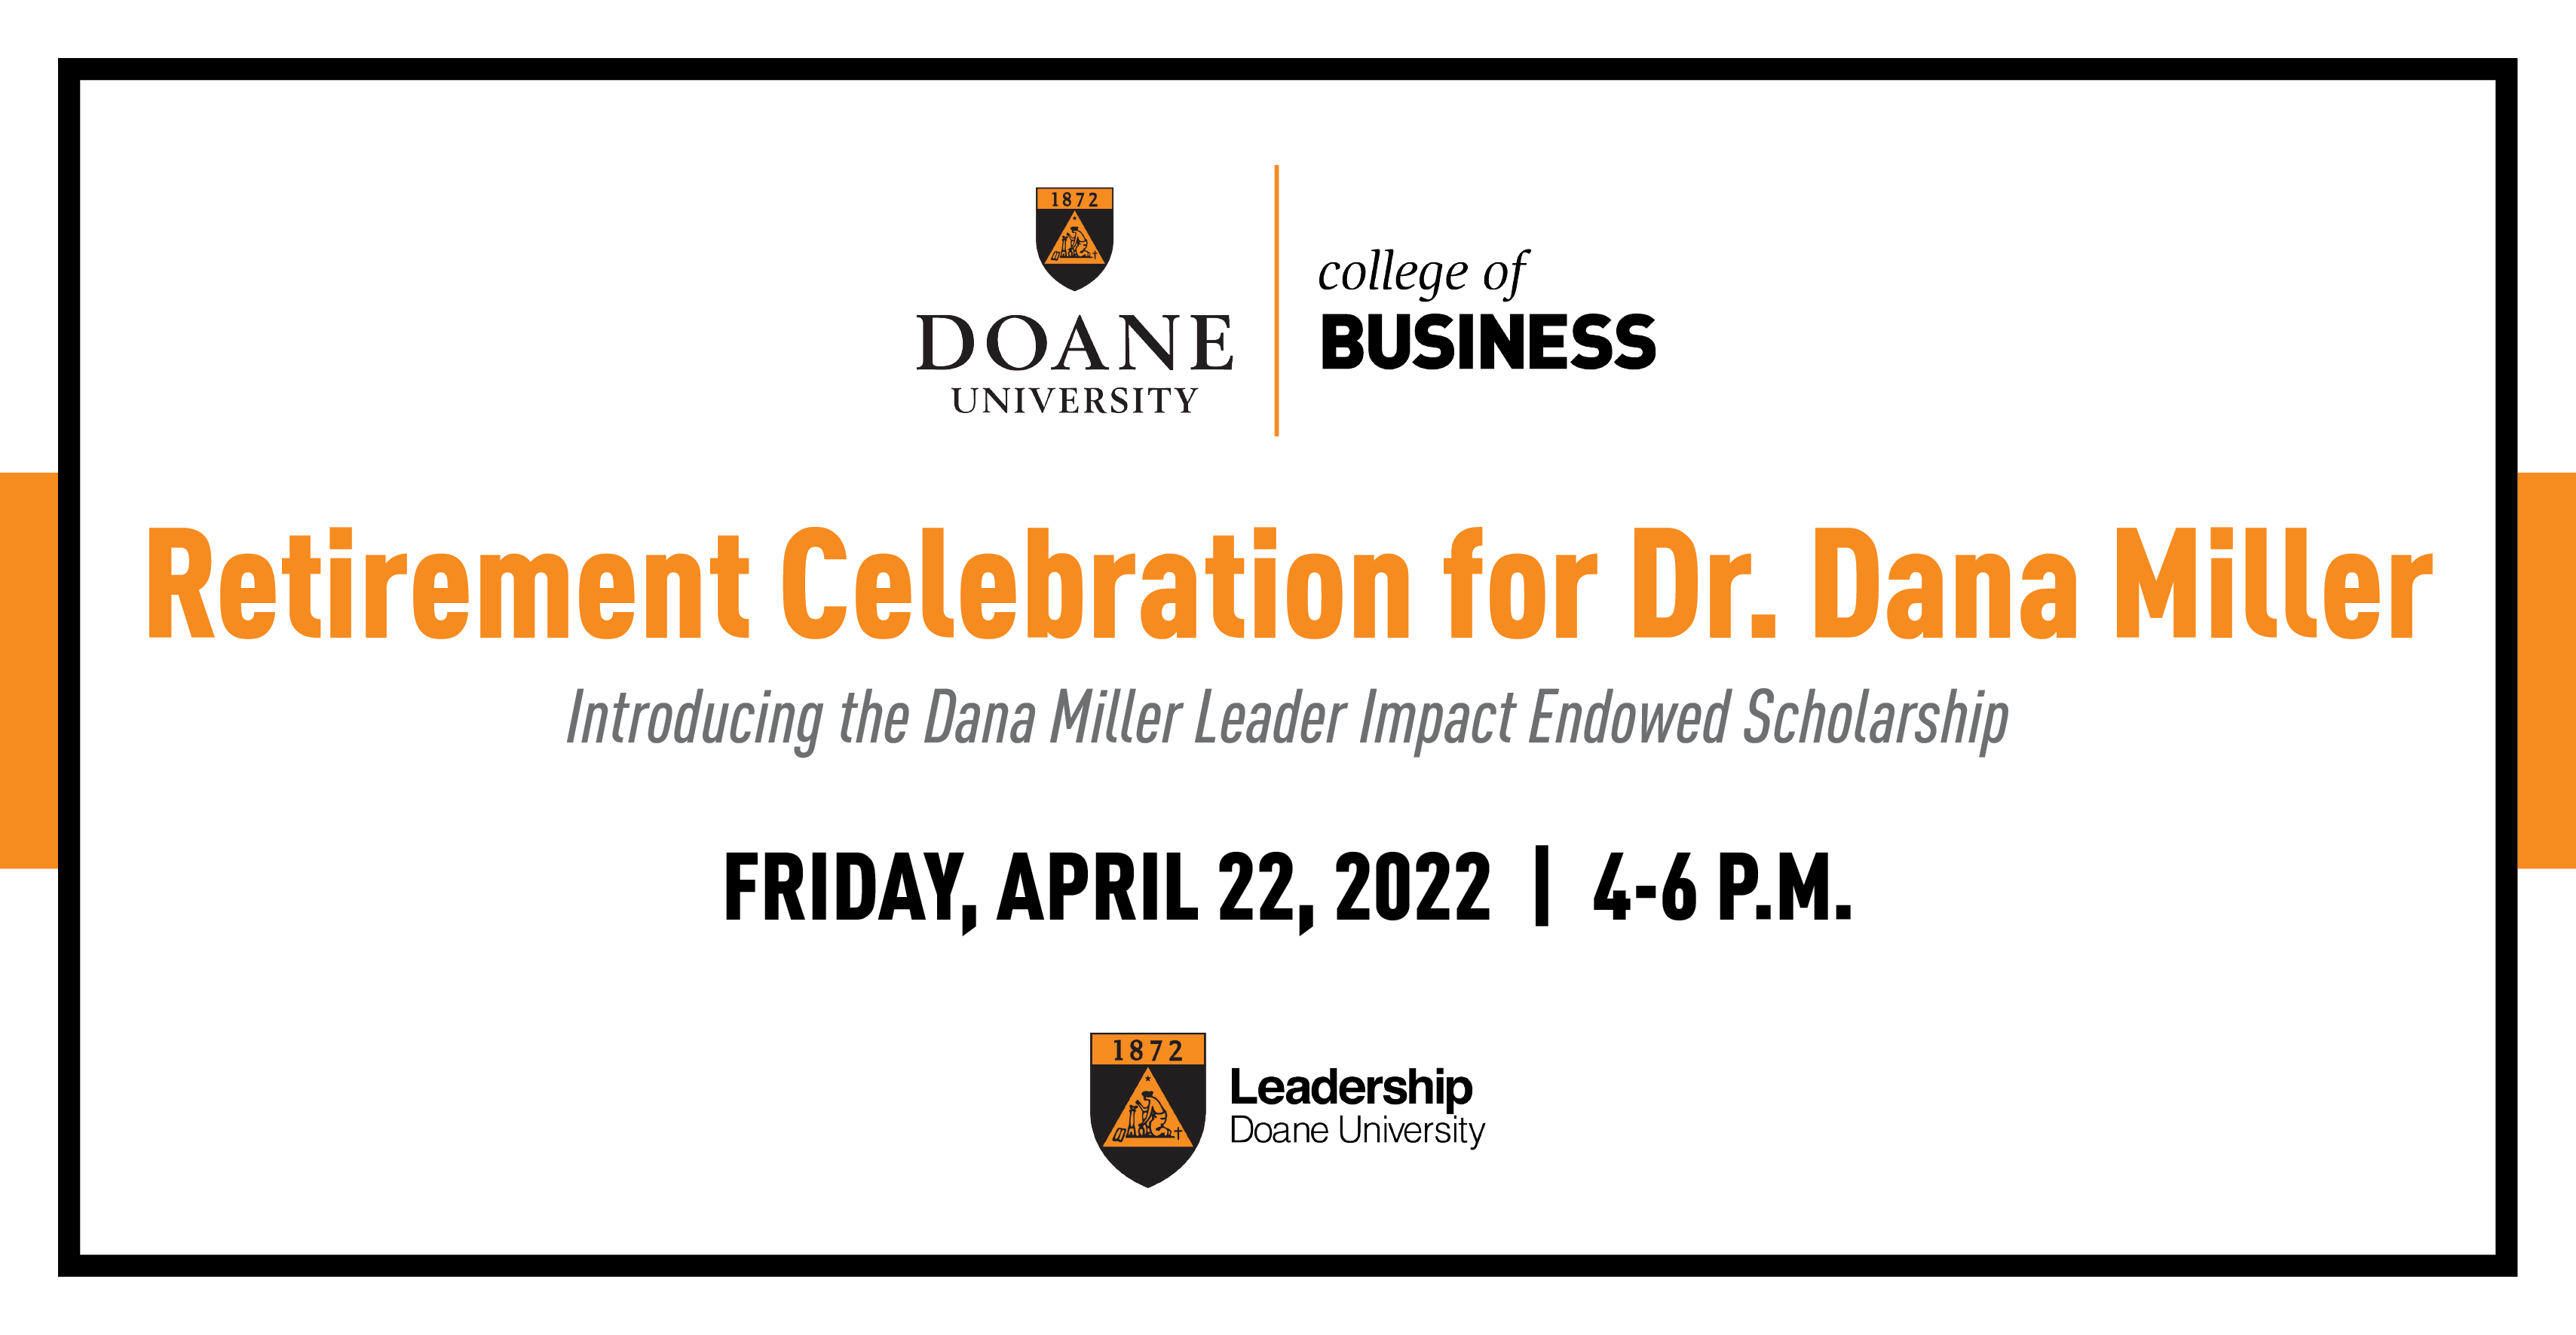 Retirement Celebration for Dr. Dana Miller, Introducing the Dana Miller Leader Impact Endowed Scholarship, Friday April 22, 2022 4 - 6 PM